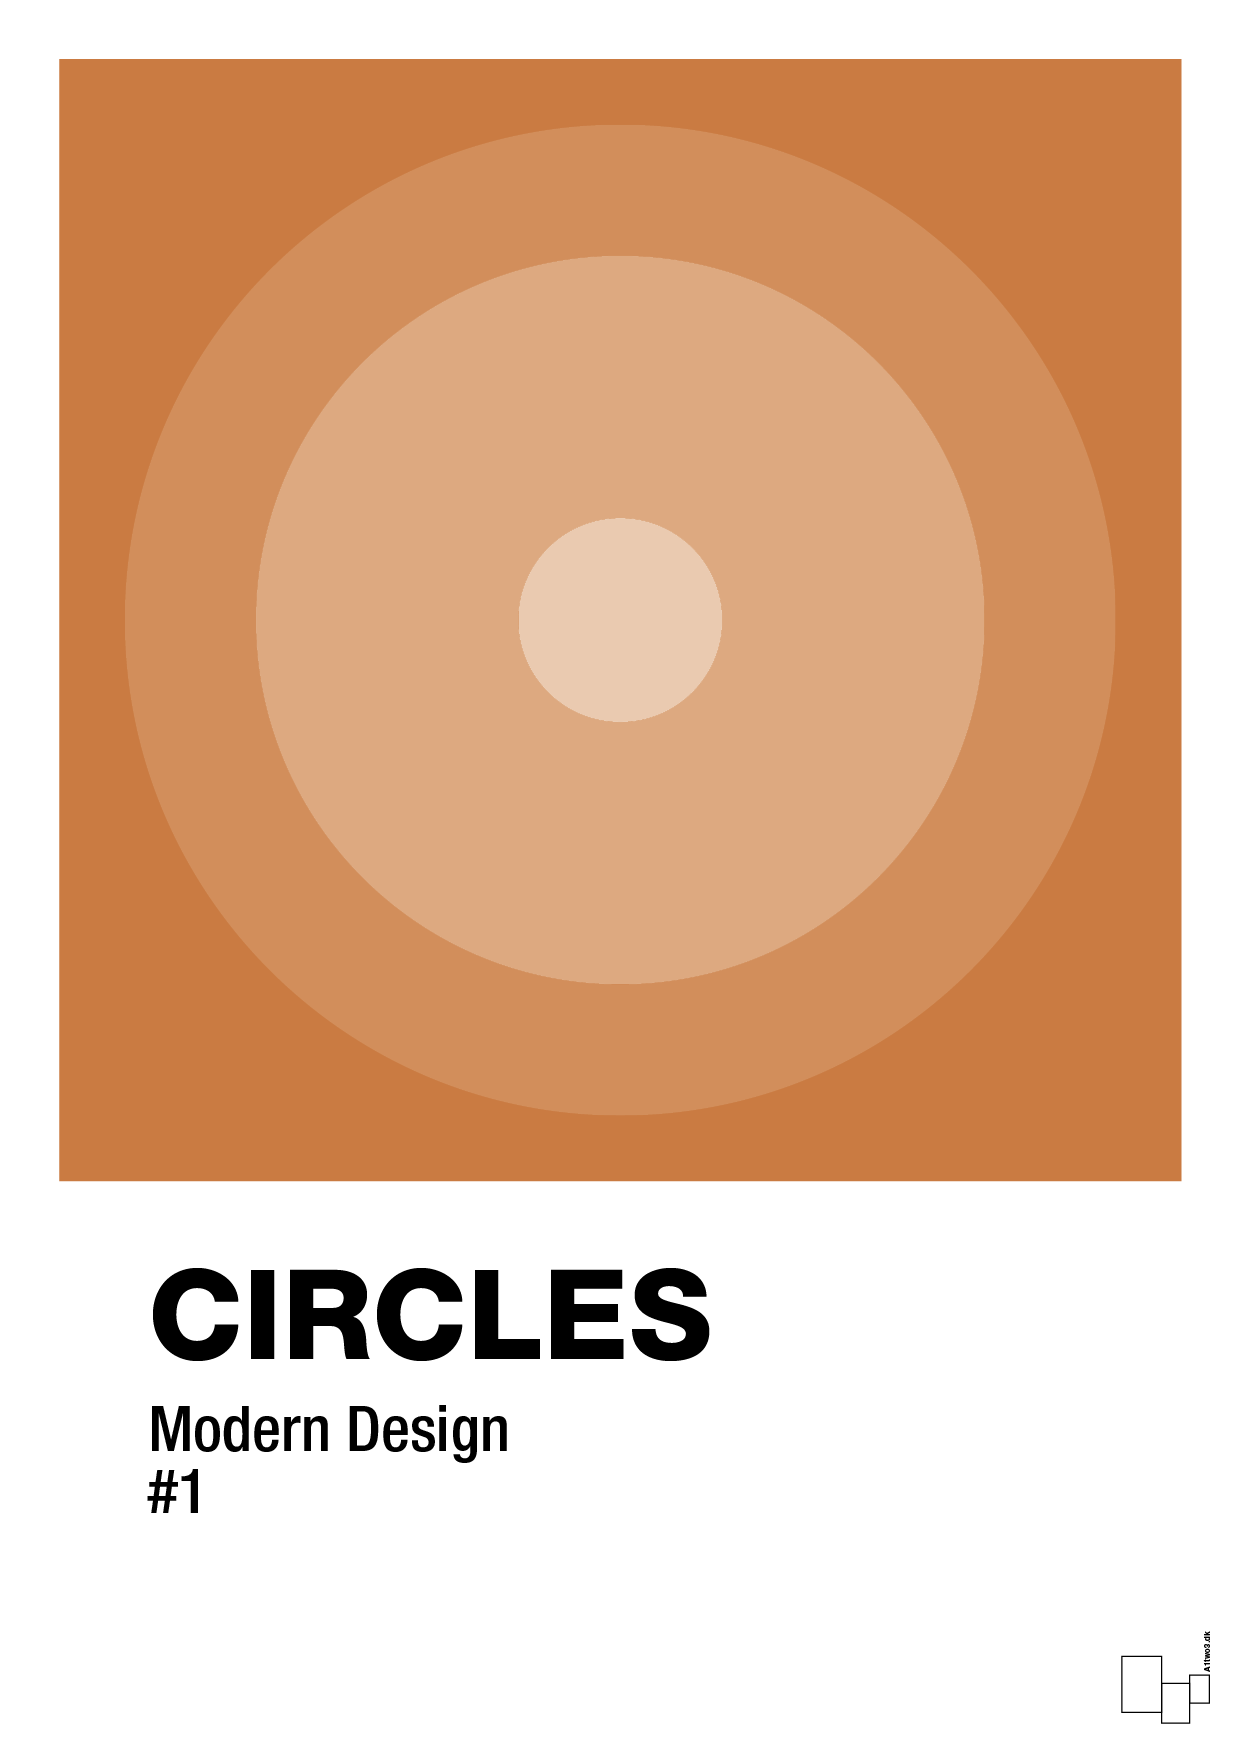 circles #1 - Plakat med Grafik i Rumba Orange